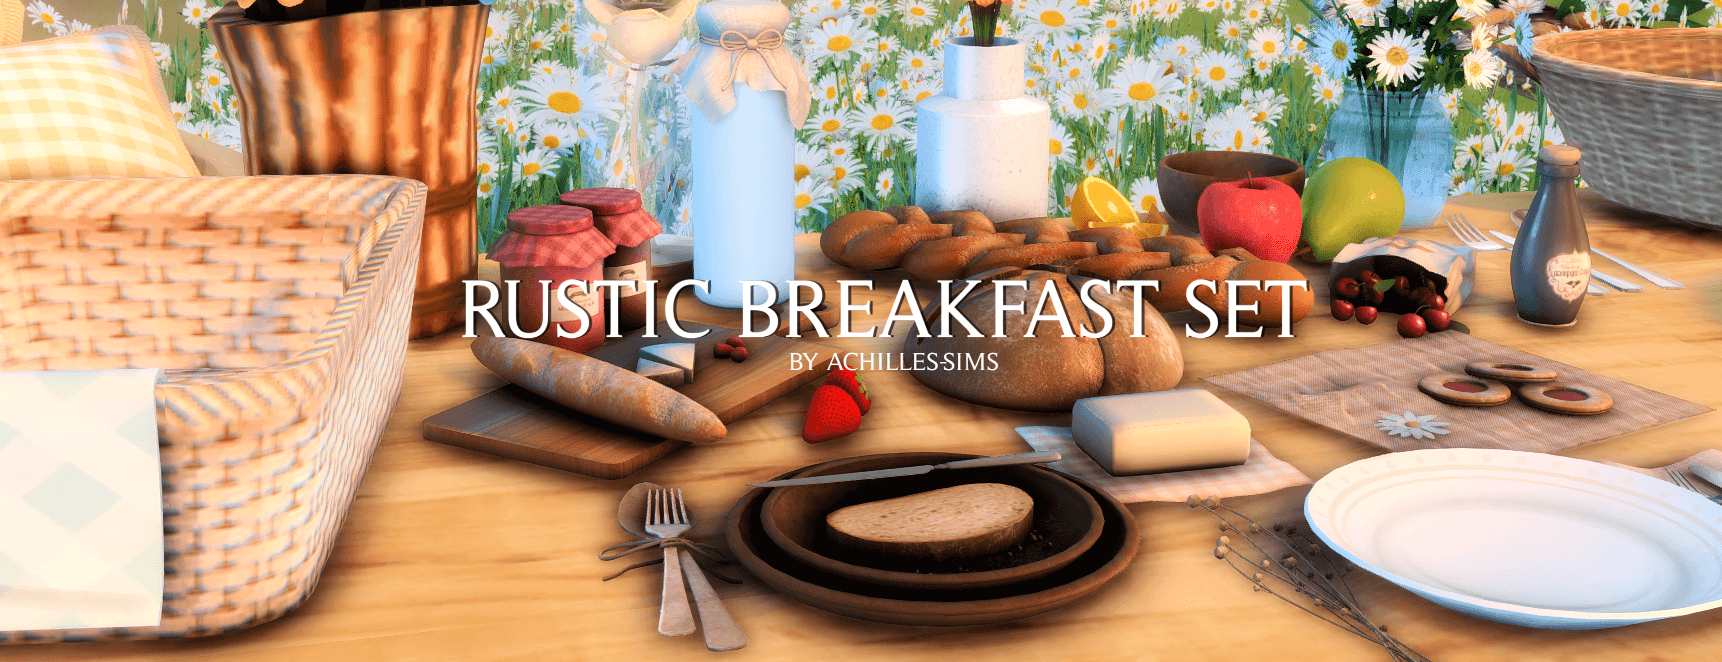 rustic breakfast set